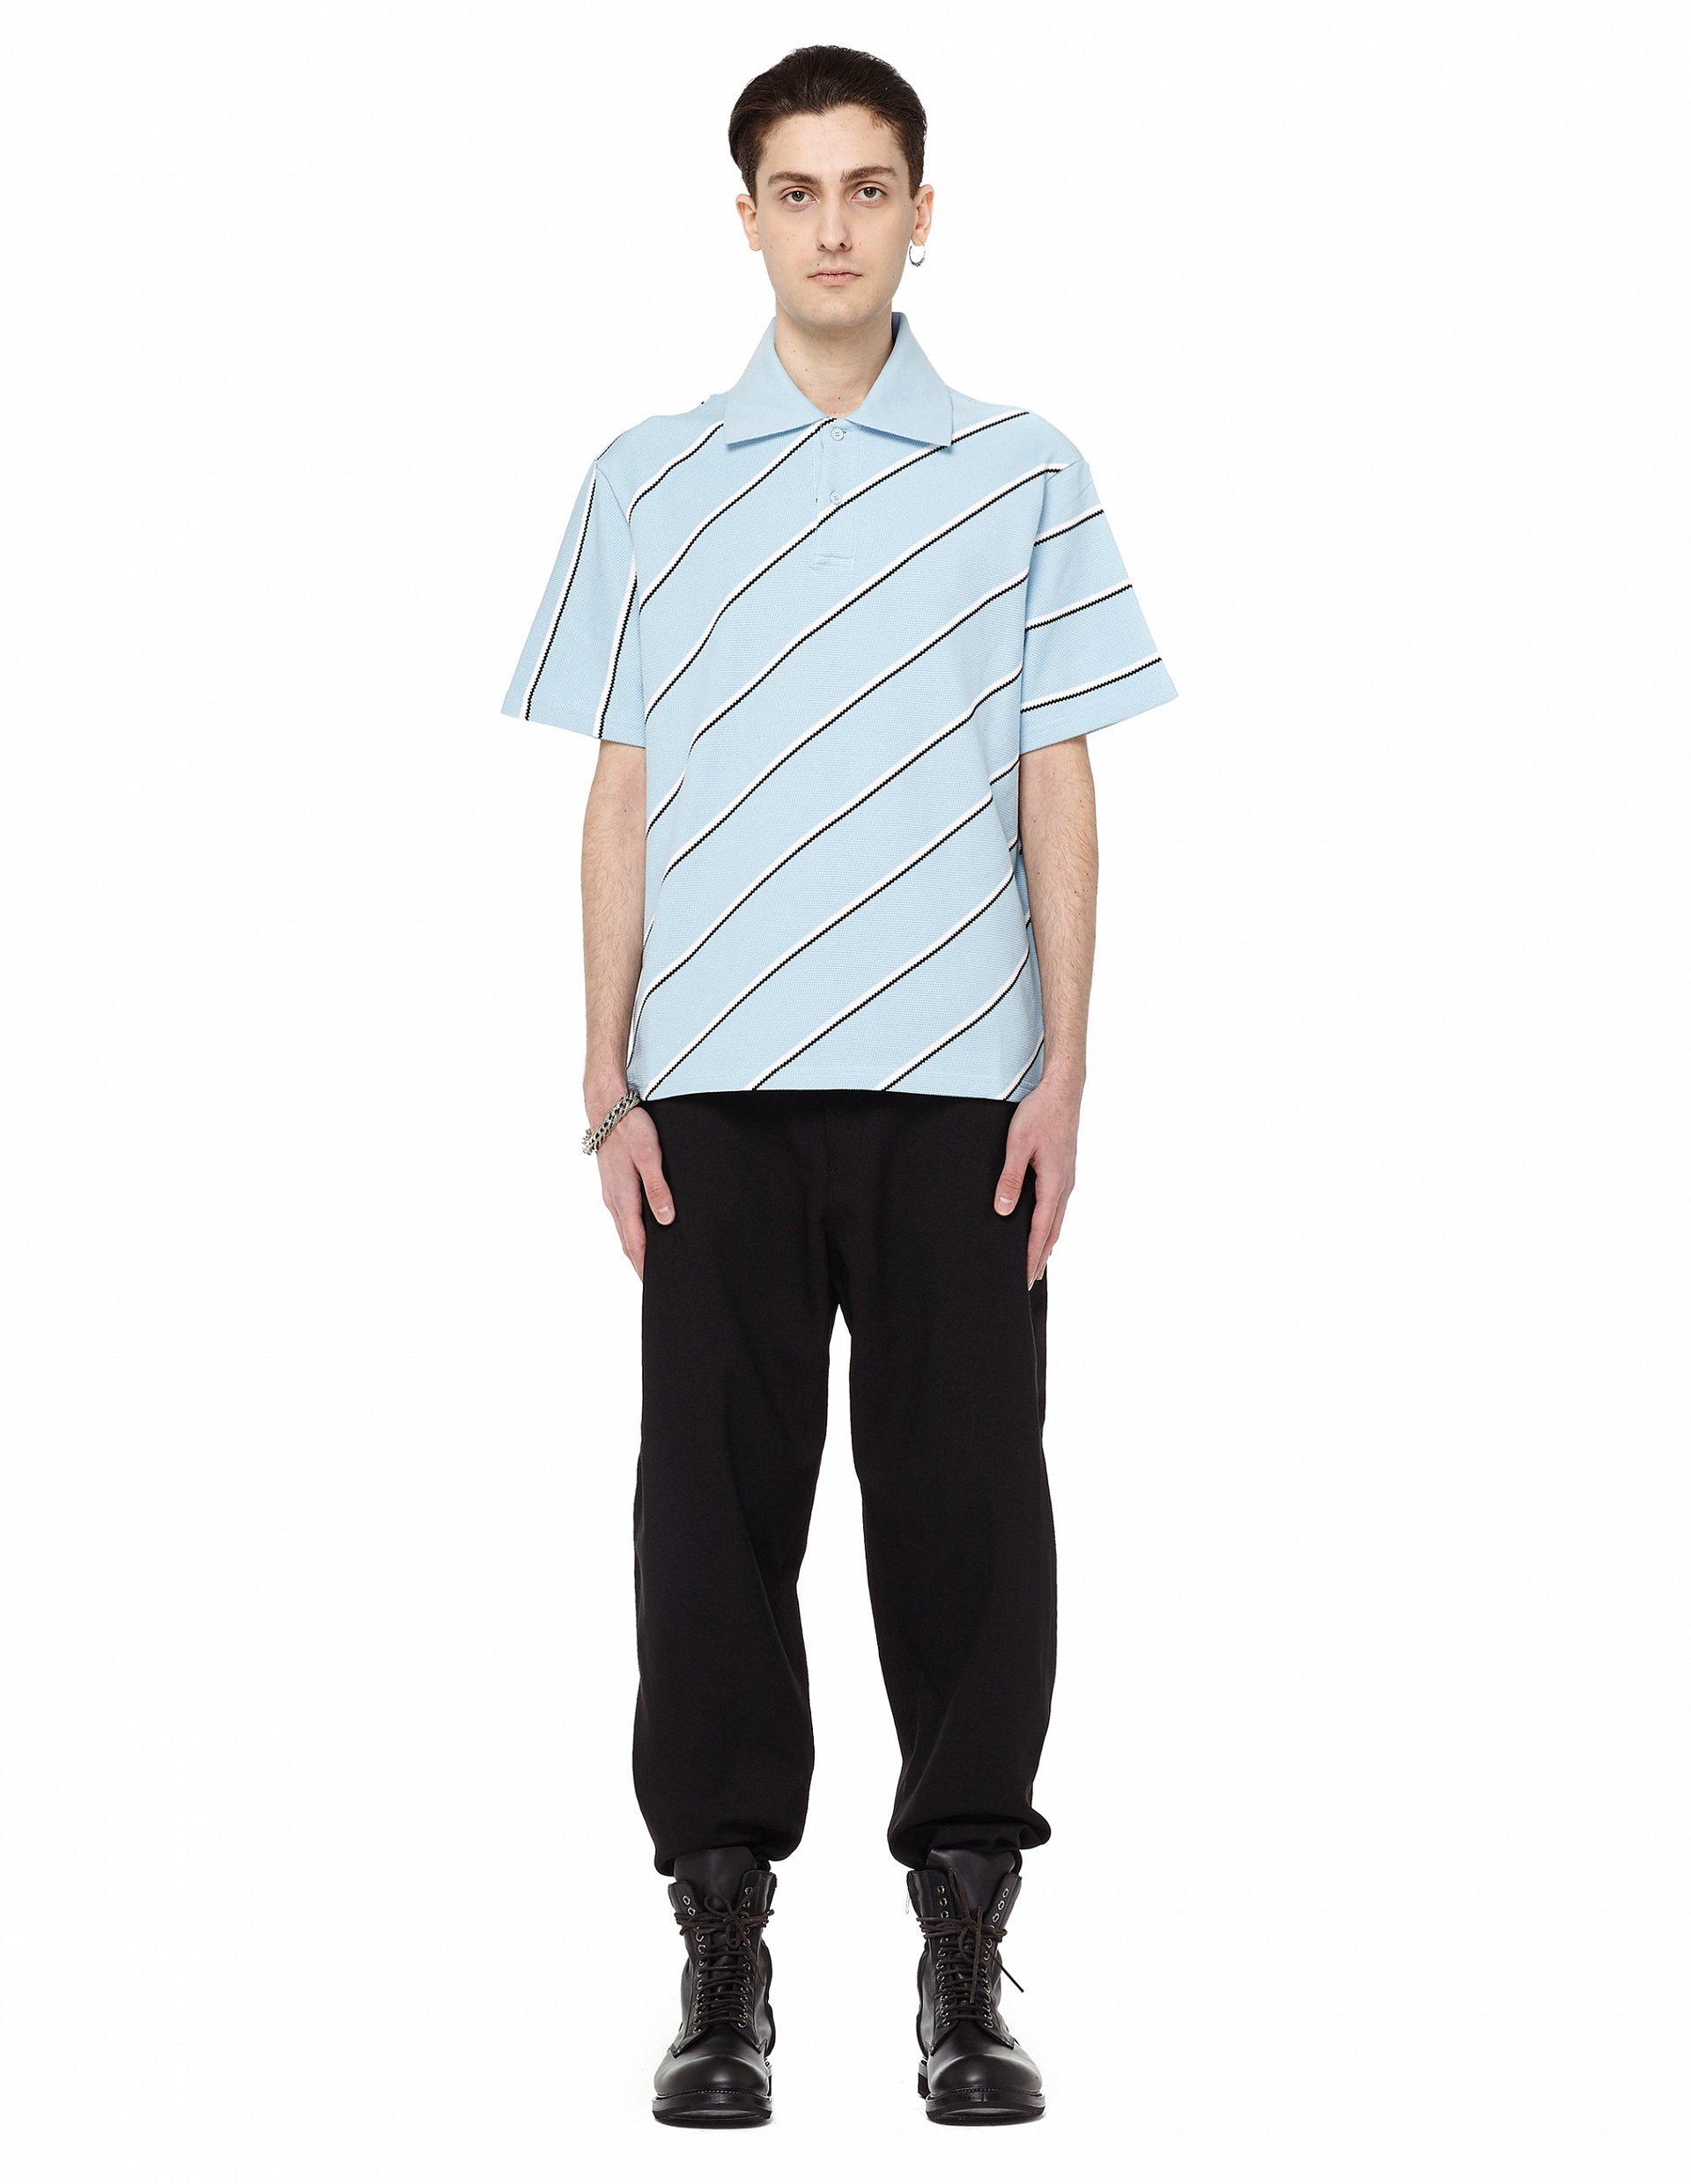 Buy Balenciaga men blue striped polo shirt for $238 online on SVMOSCOW